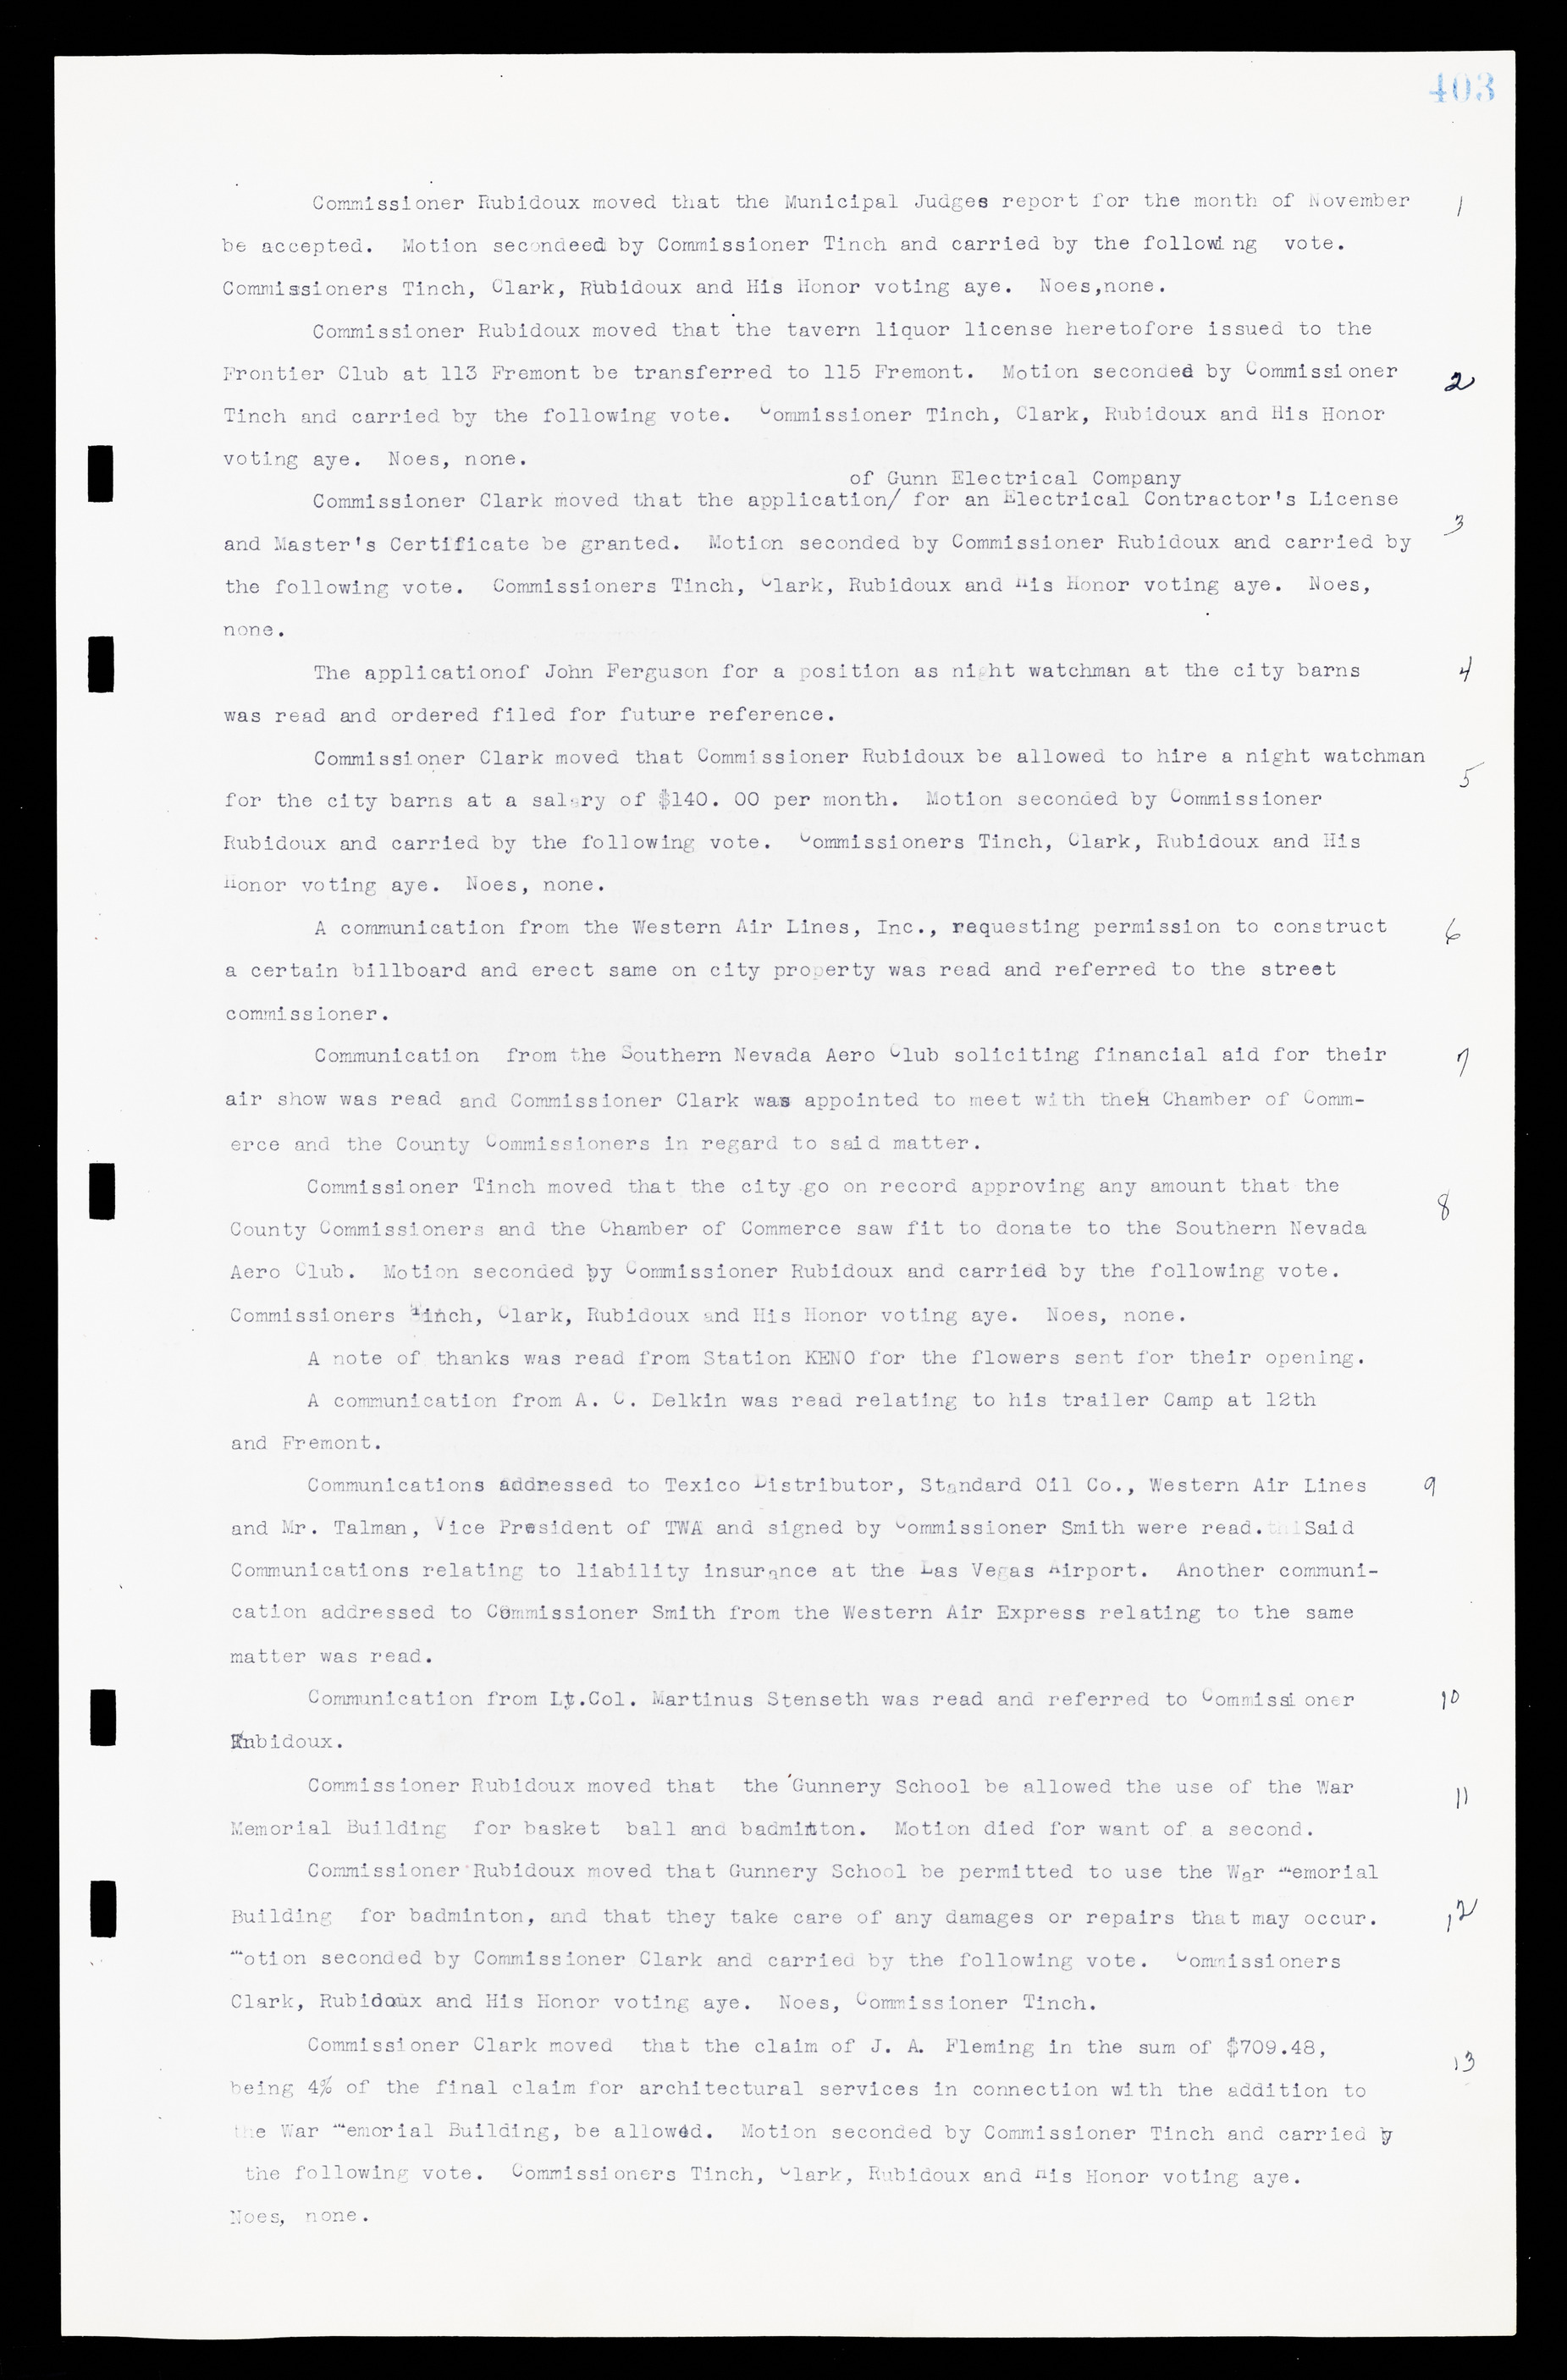 Las Vegas City Commission Minutes, February 17, 1937 to August 4, 1942, lvc000004-429